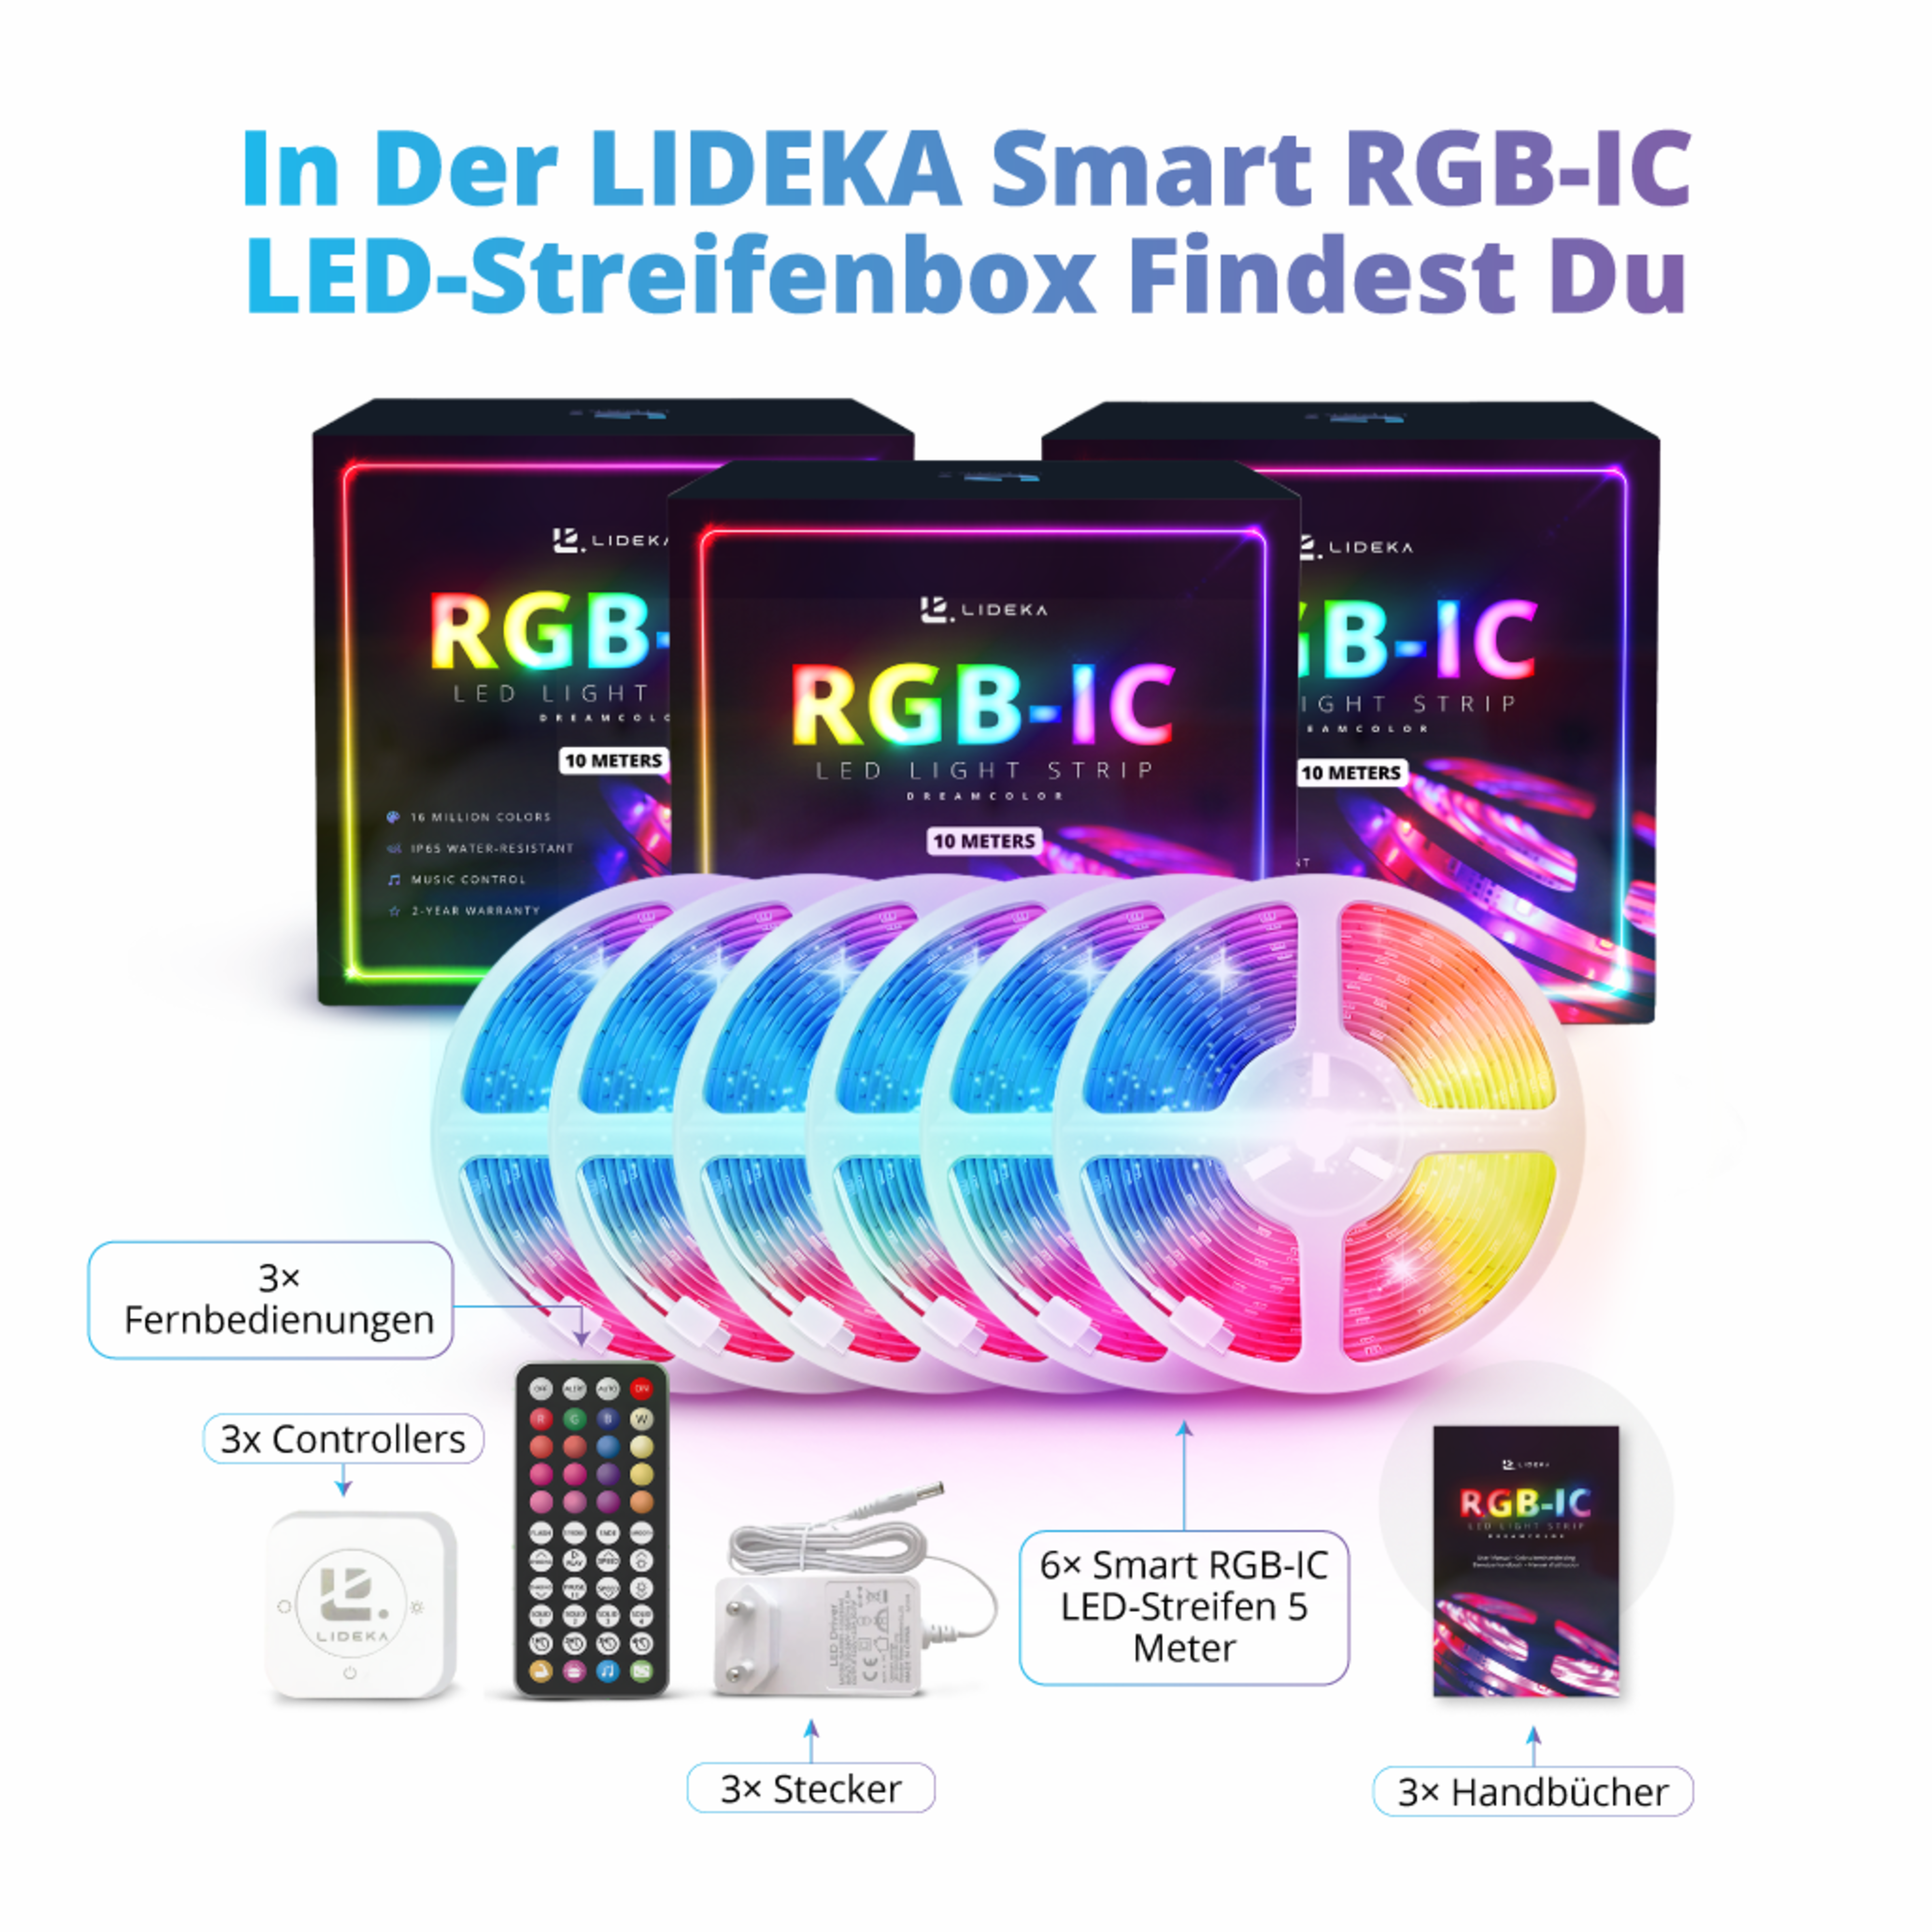 RGBIC Multicolors LED-Streifen Regenbogen strips 30m LIDEKA LED